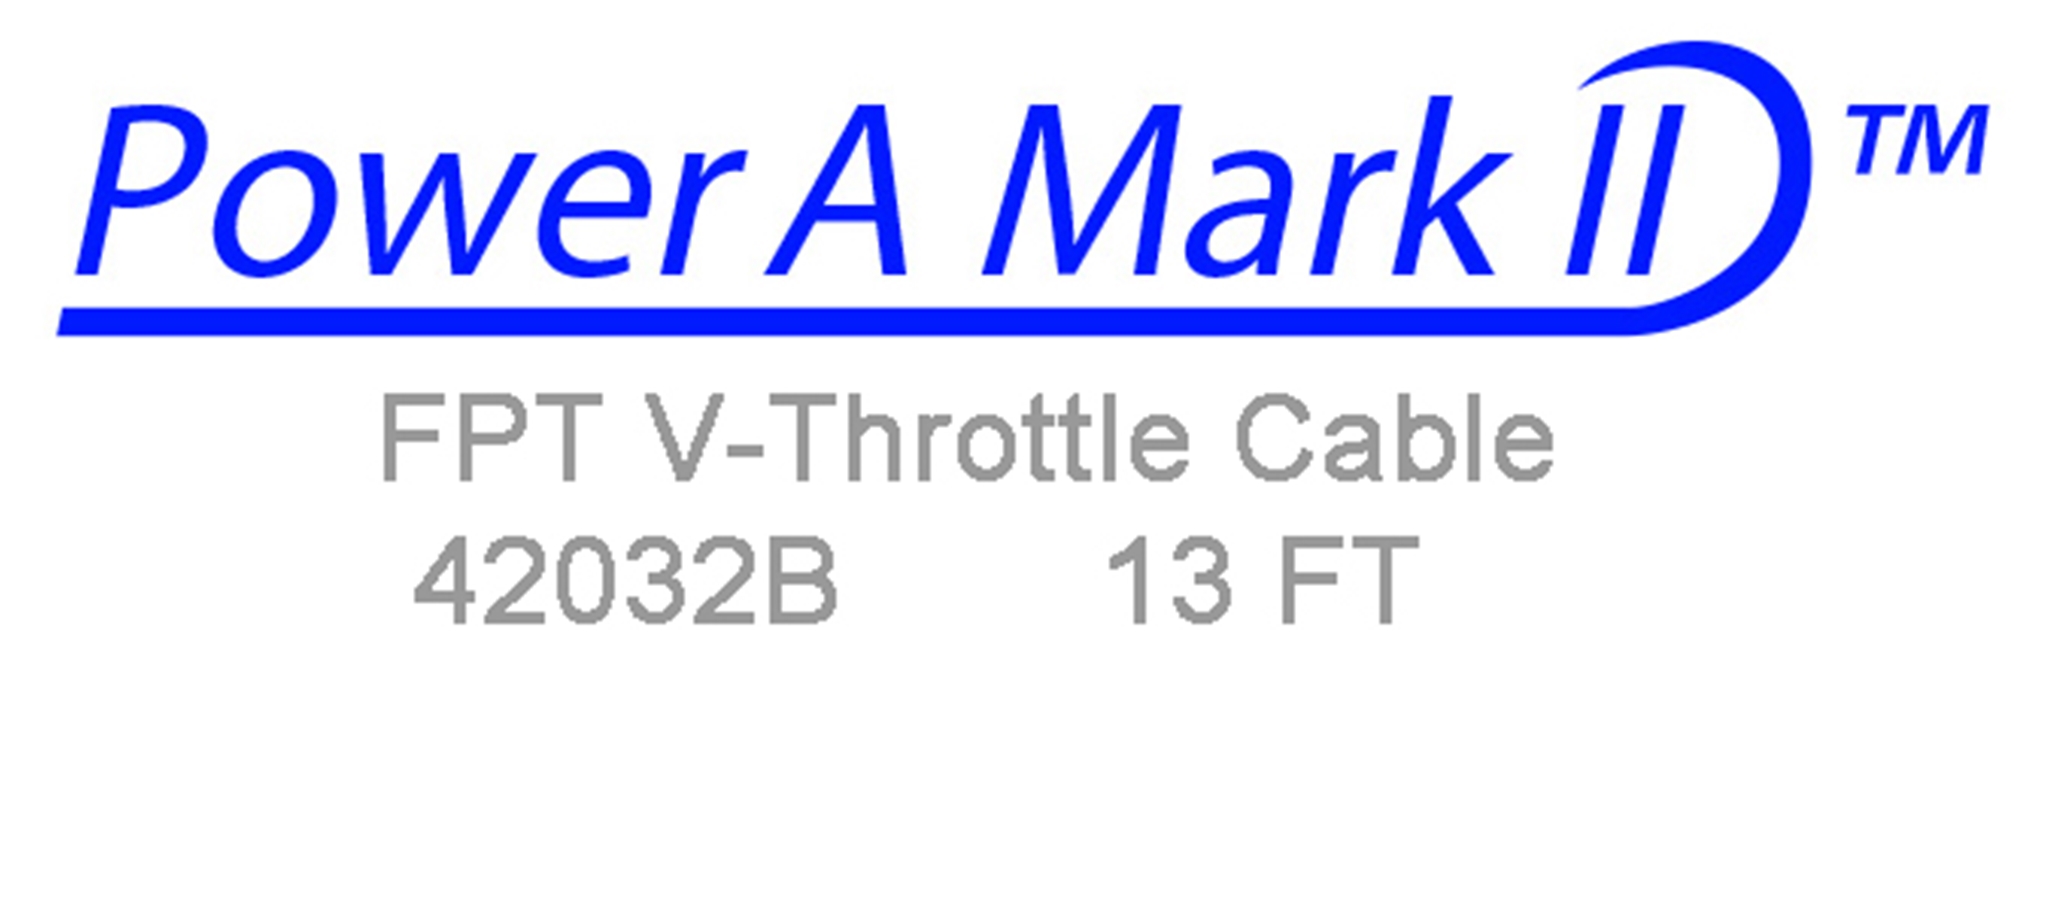 42032B Ftp V-Throttle Cable 13 Ft Length